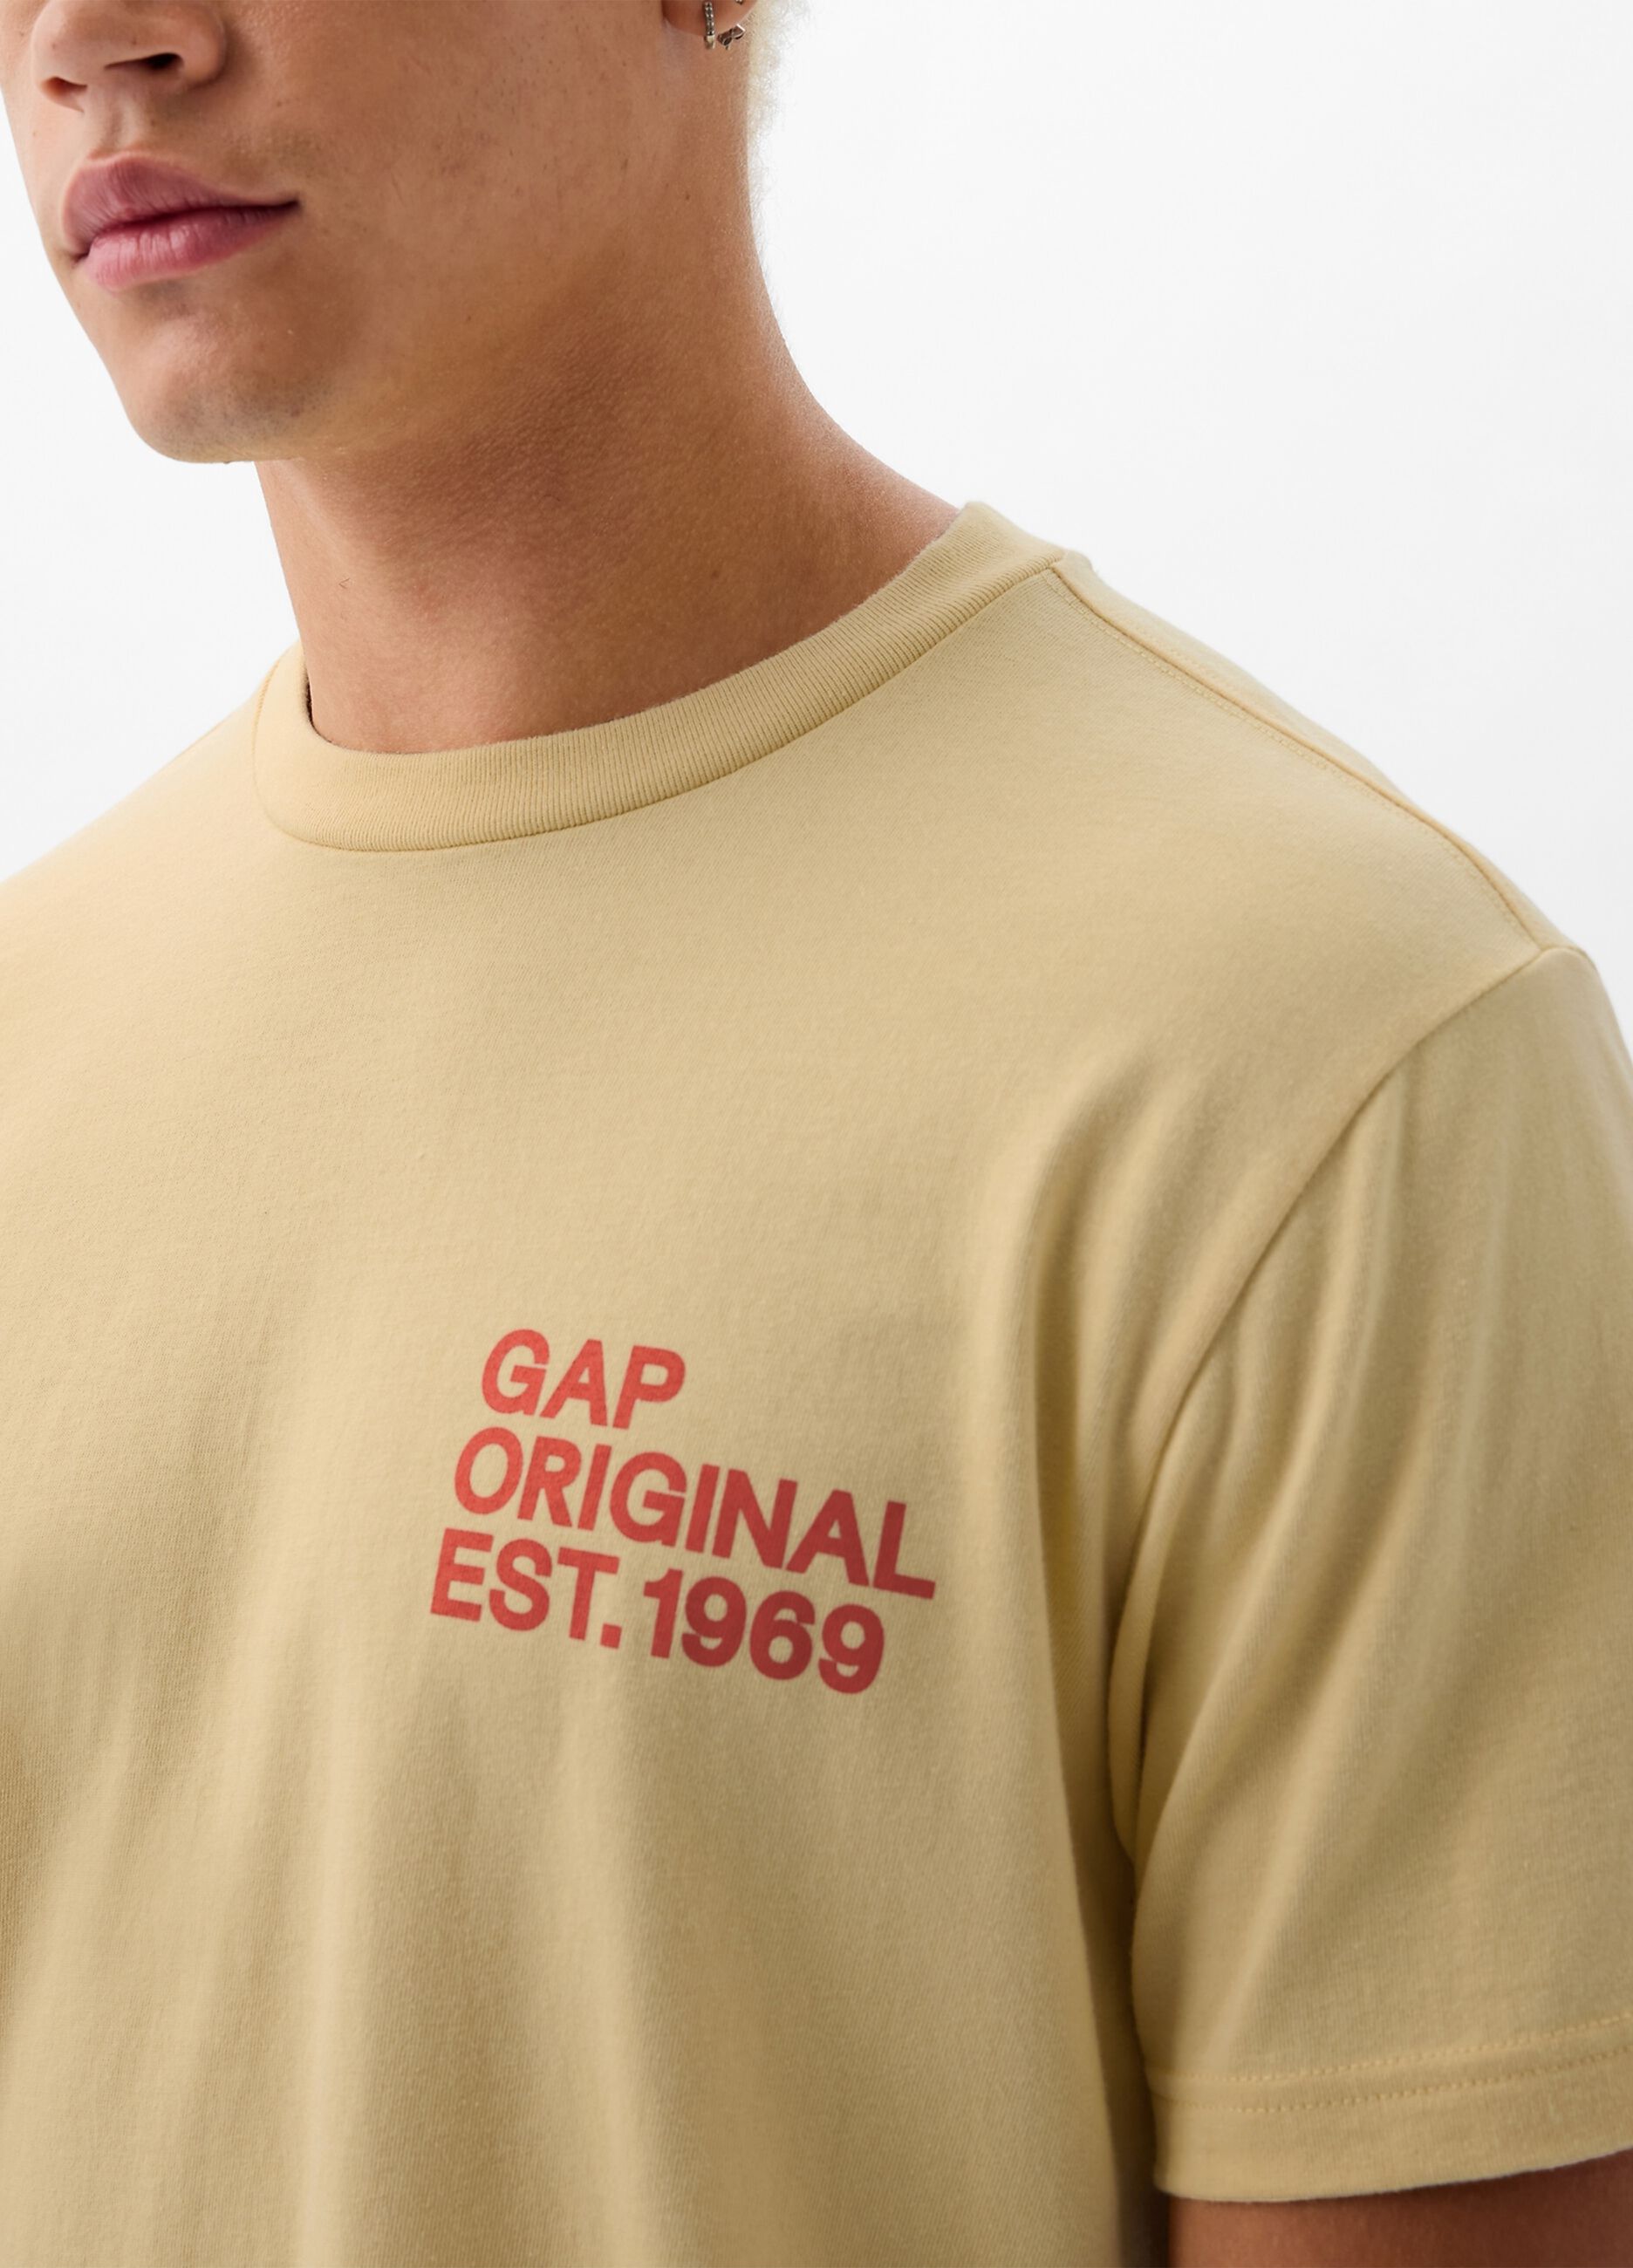 T-shirt in cotone con stampa logo